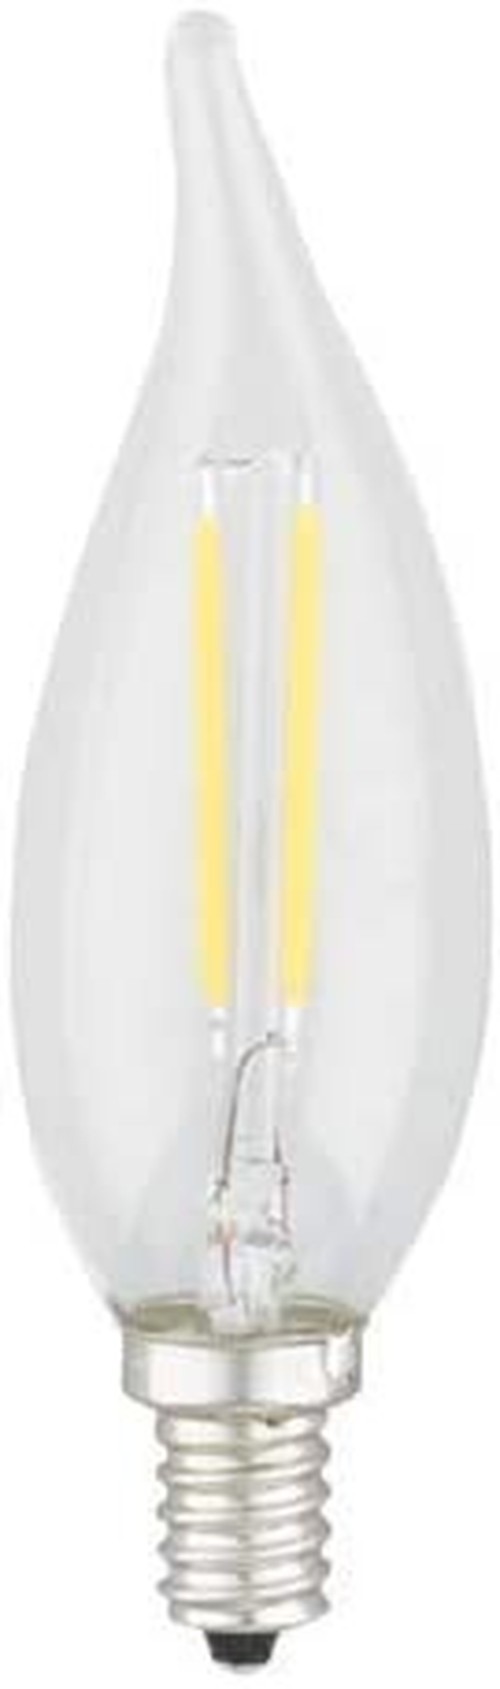 Lenawee LEN-41116-UL 2W Filament Candle Flame Tip E12 2700K Light Bulb